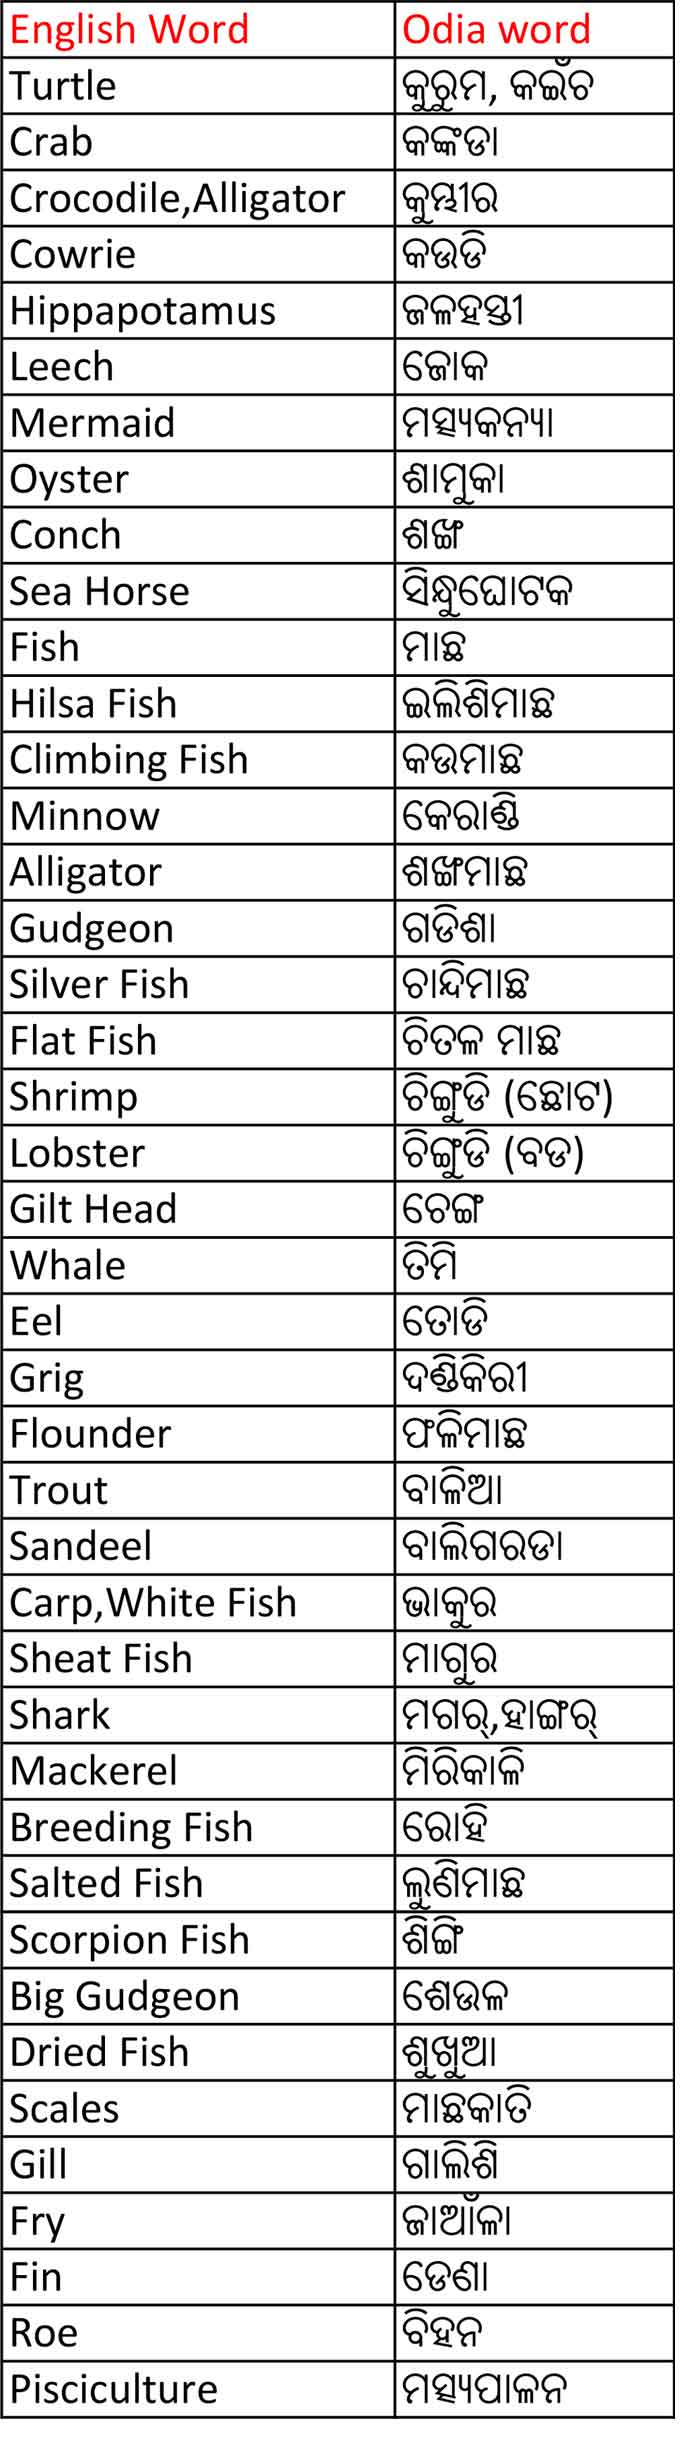 Aquatic Animals Name in English to Odia